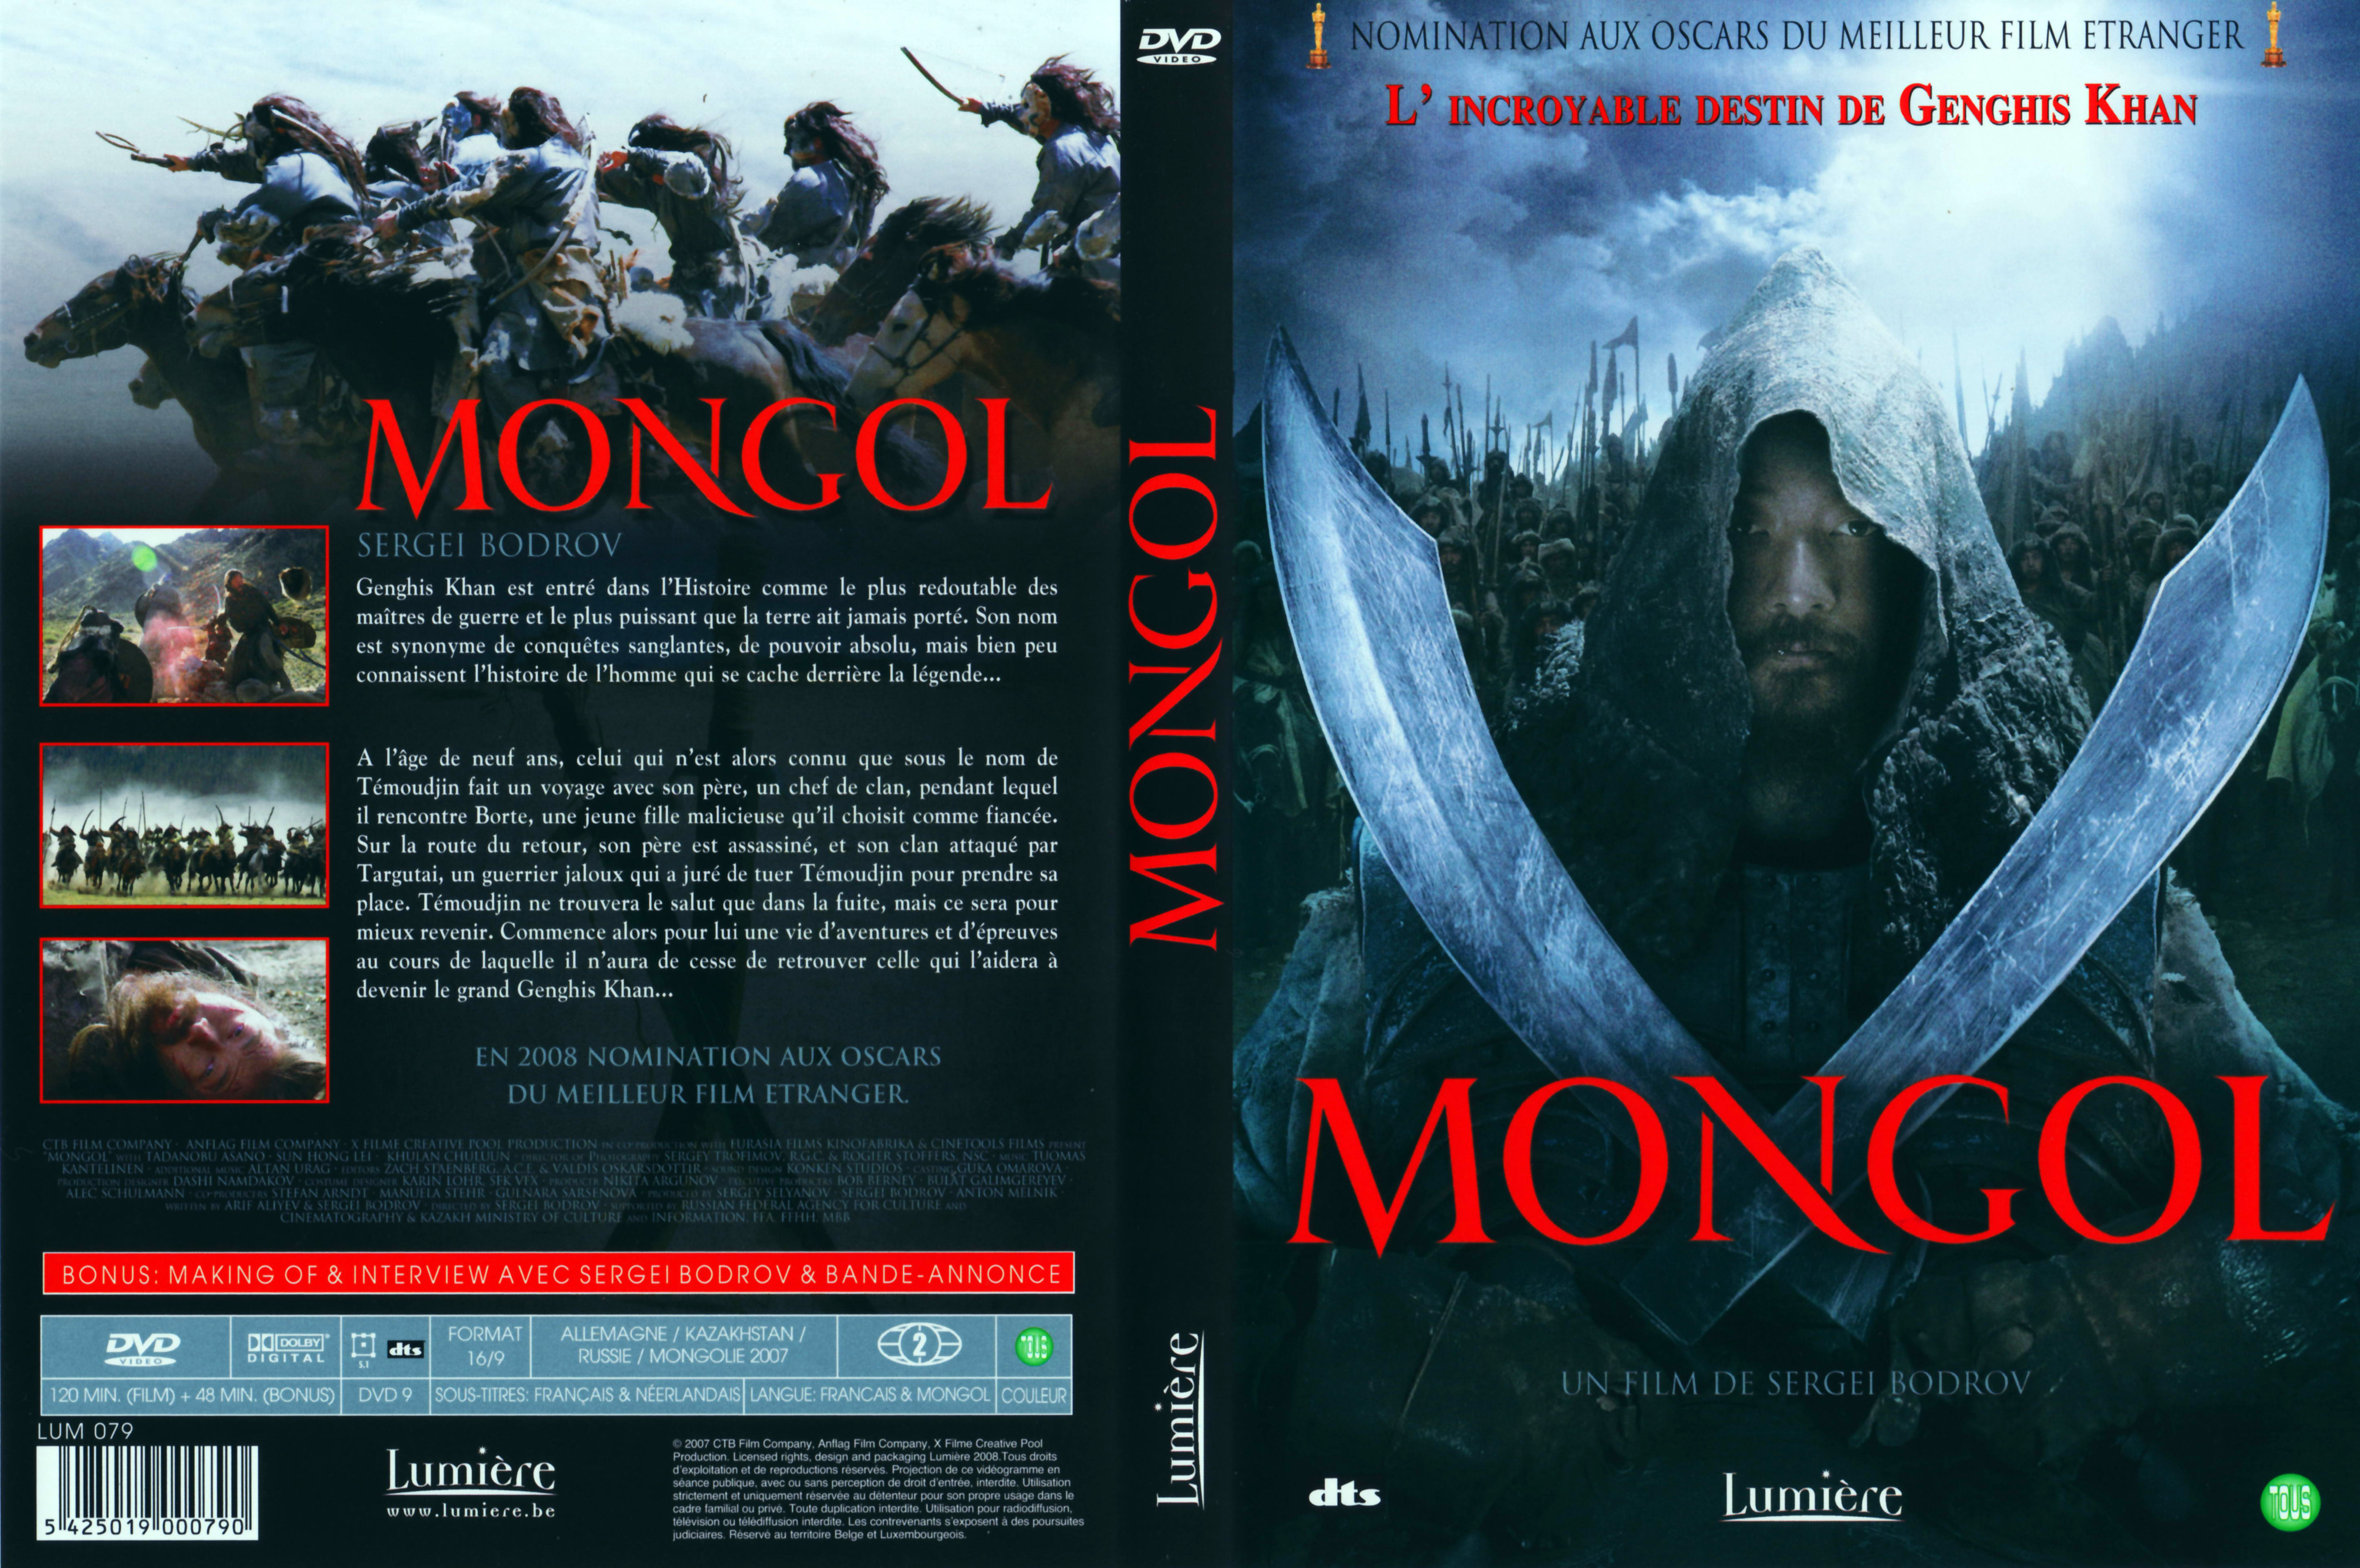 Jaquette DVD Mongol v2